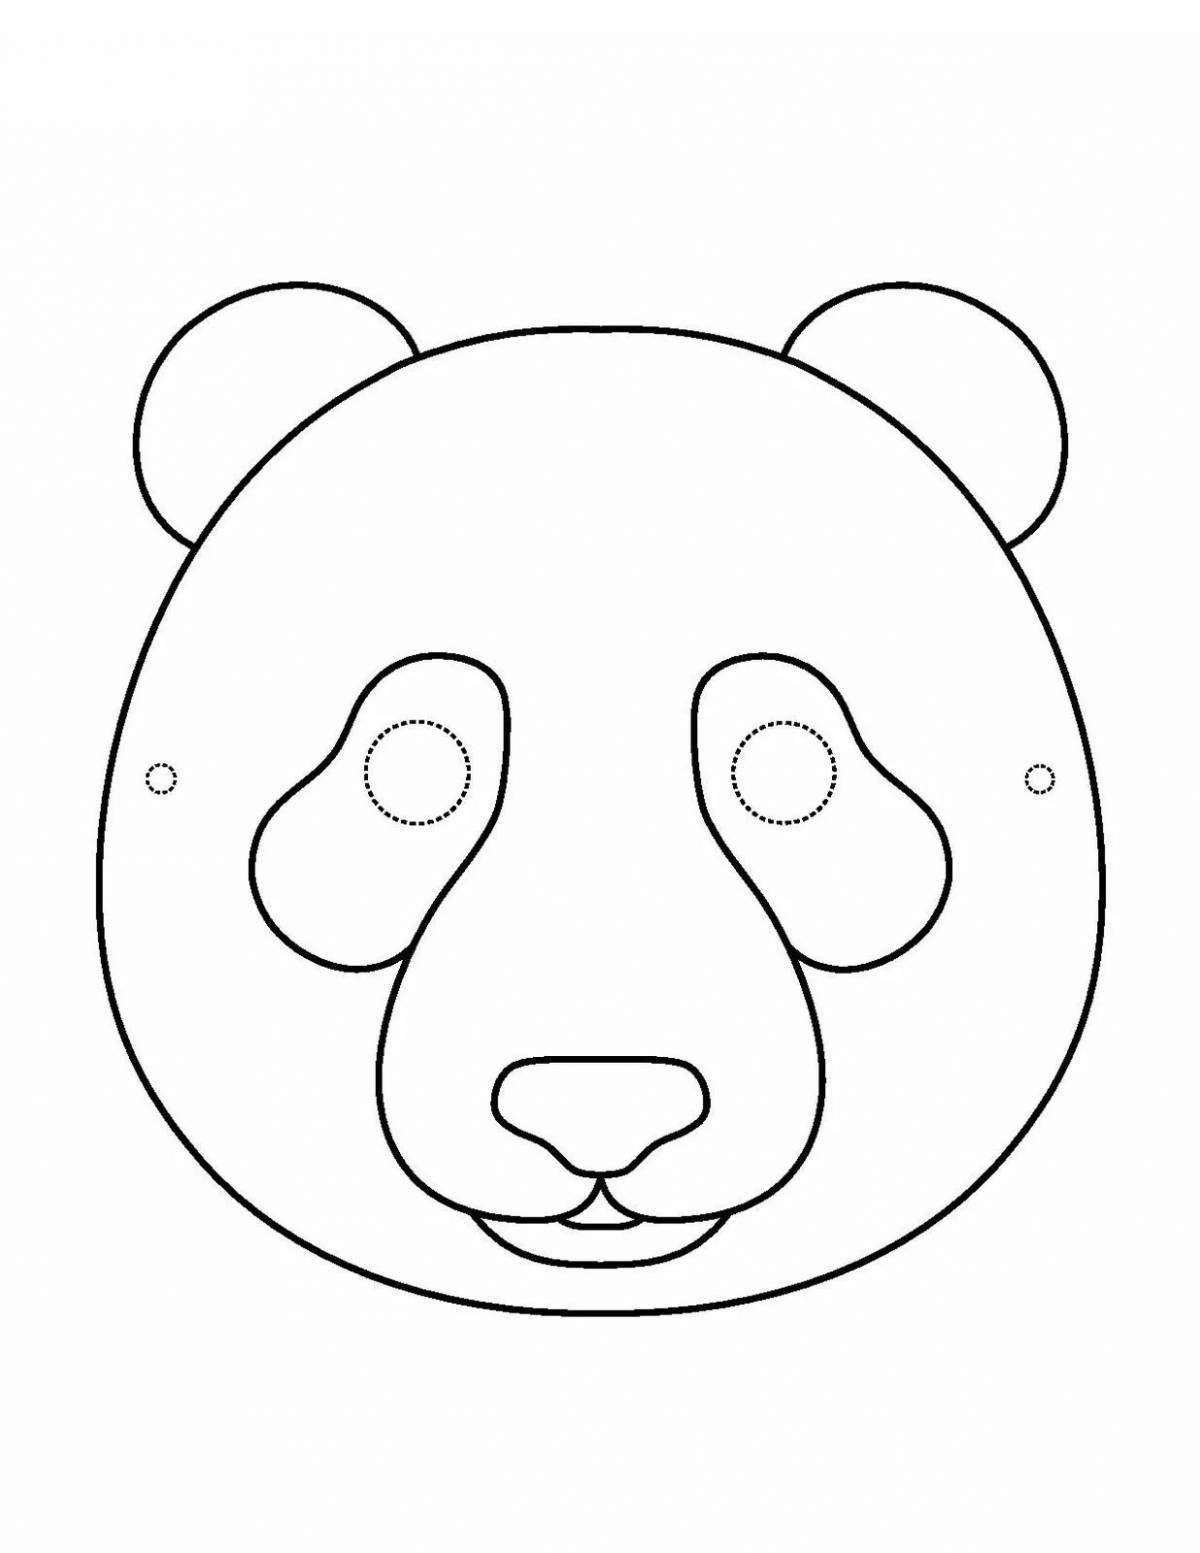 Joyful bear coloring page